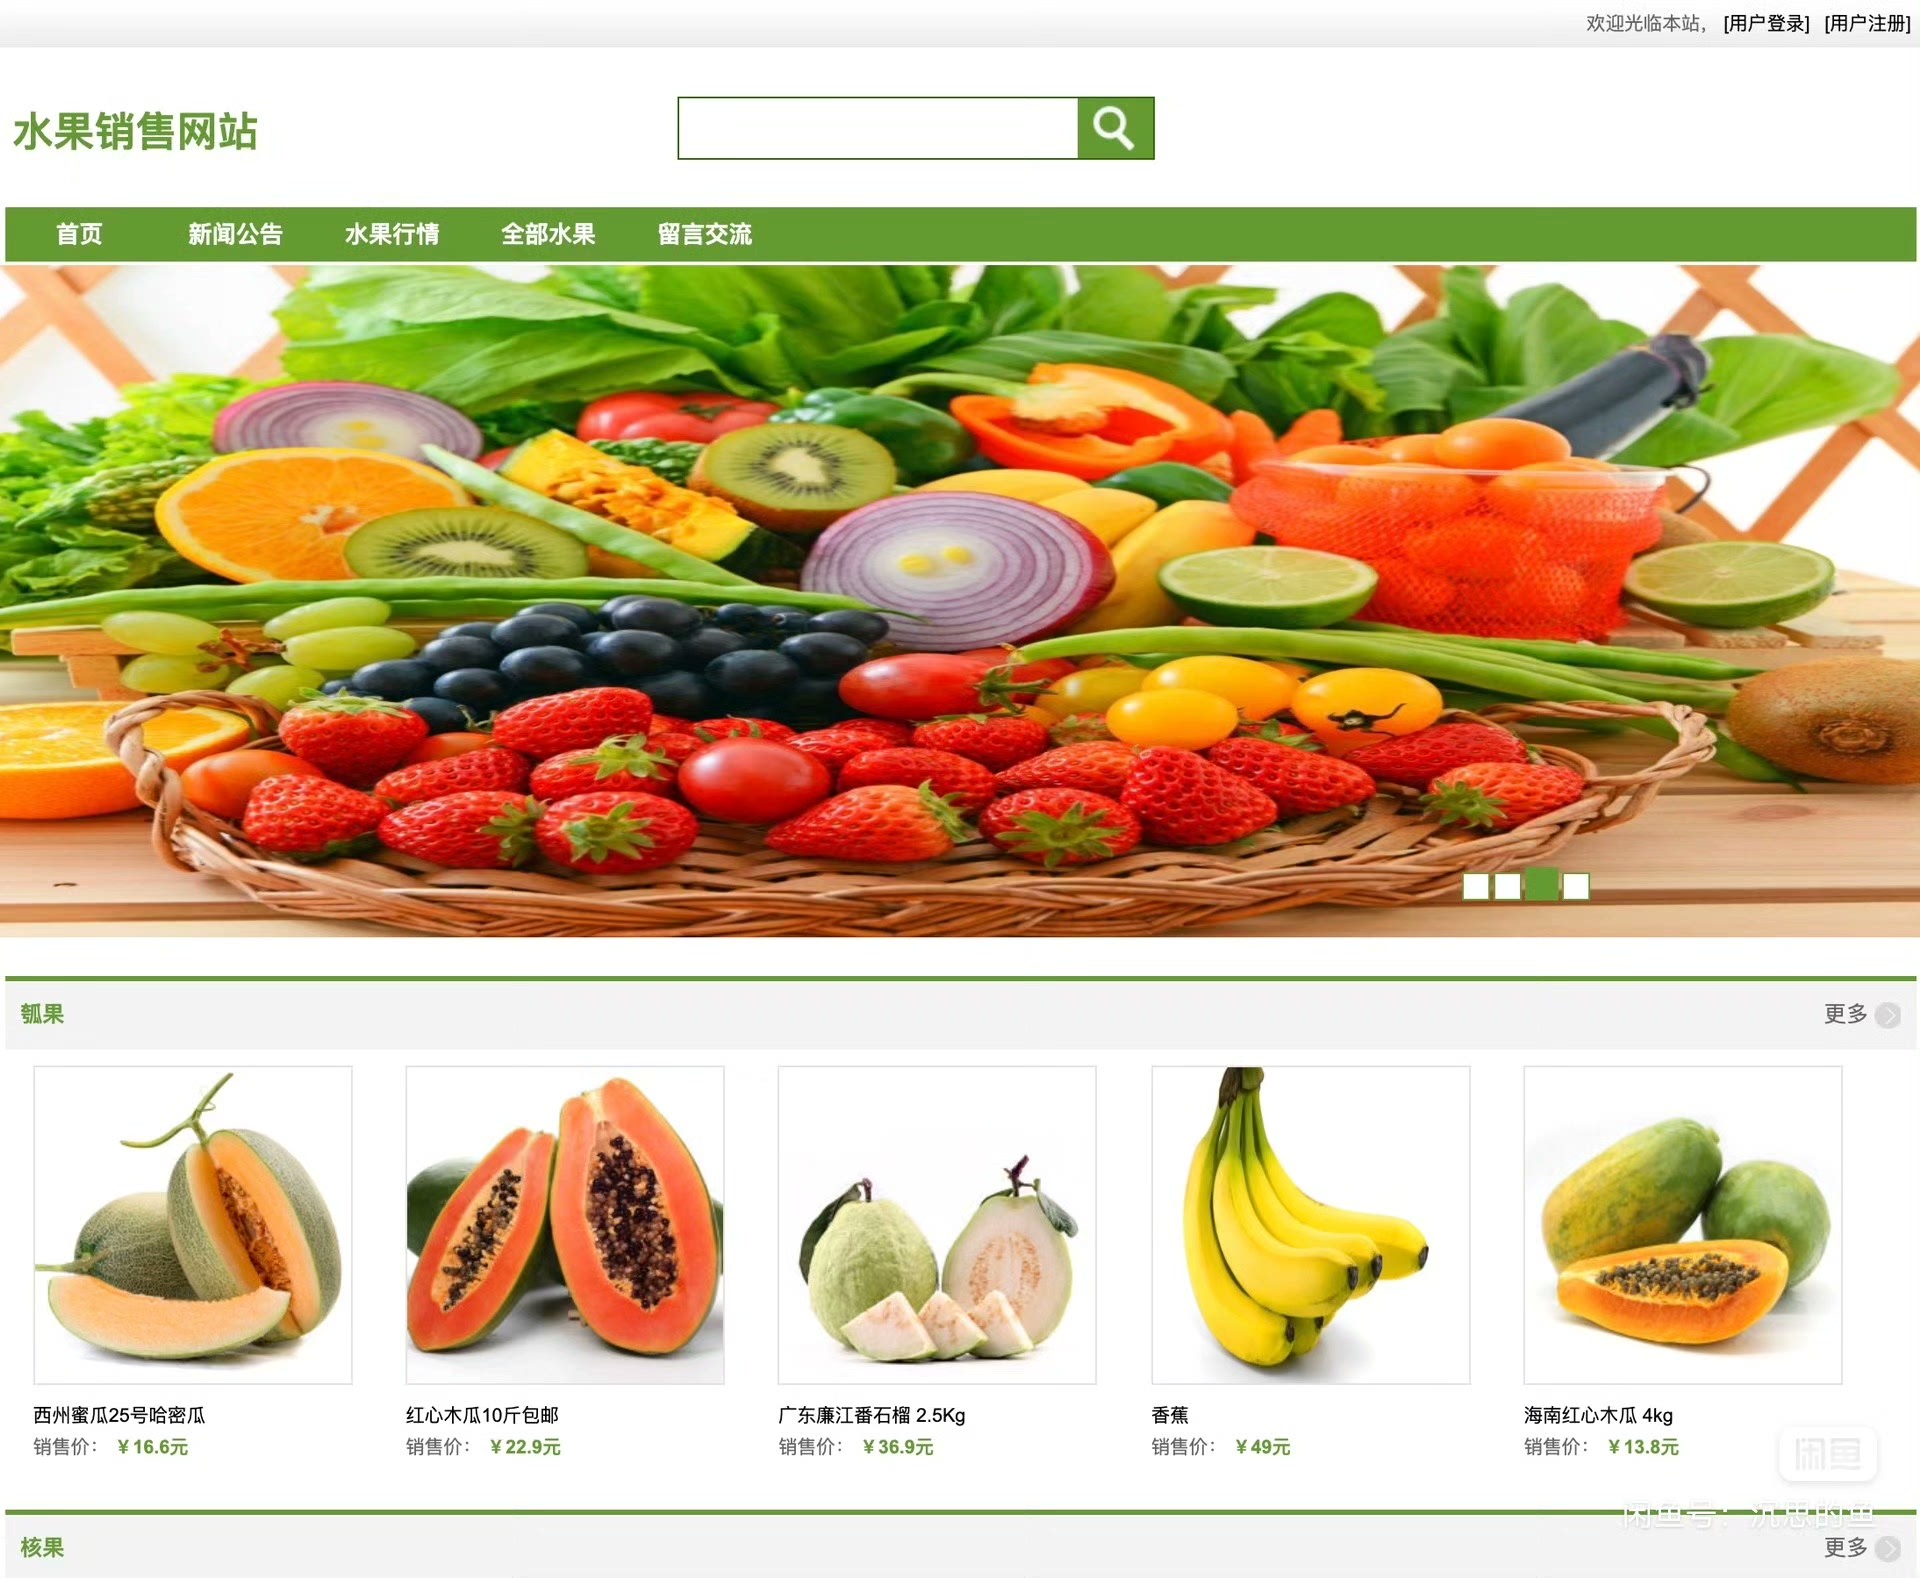 Springboot jsp 水果销售网站 水果销售系统 水